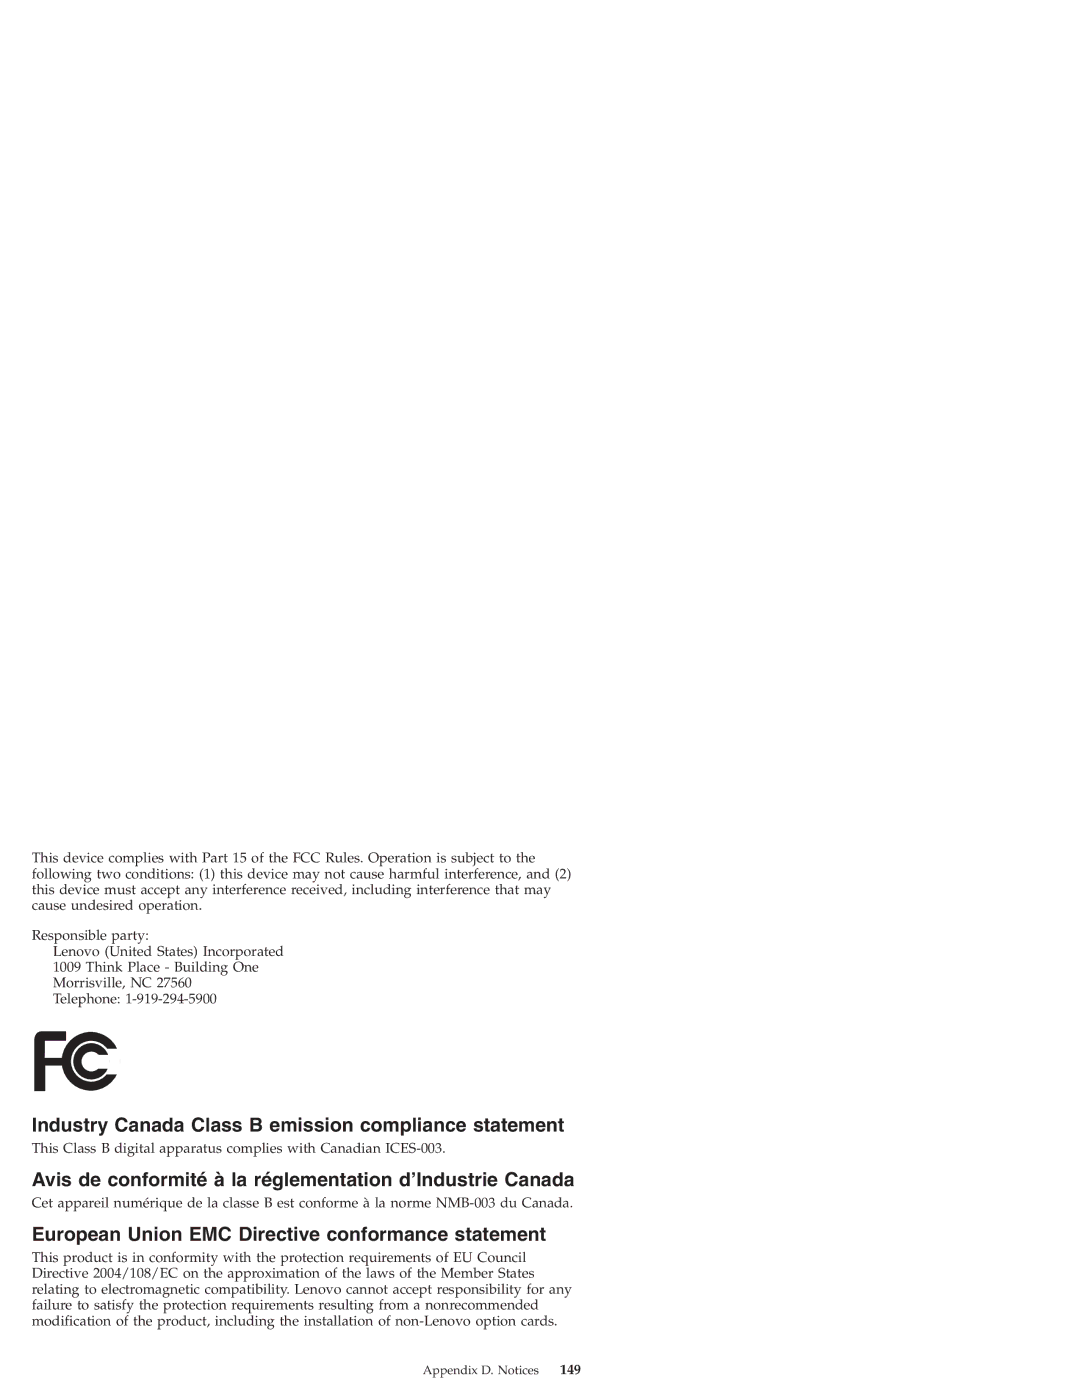 Lenovo S10 Industry Canada Class B emission compliance statement, European Union EMC Directive conformance statement, 149 